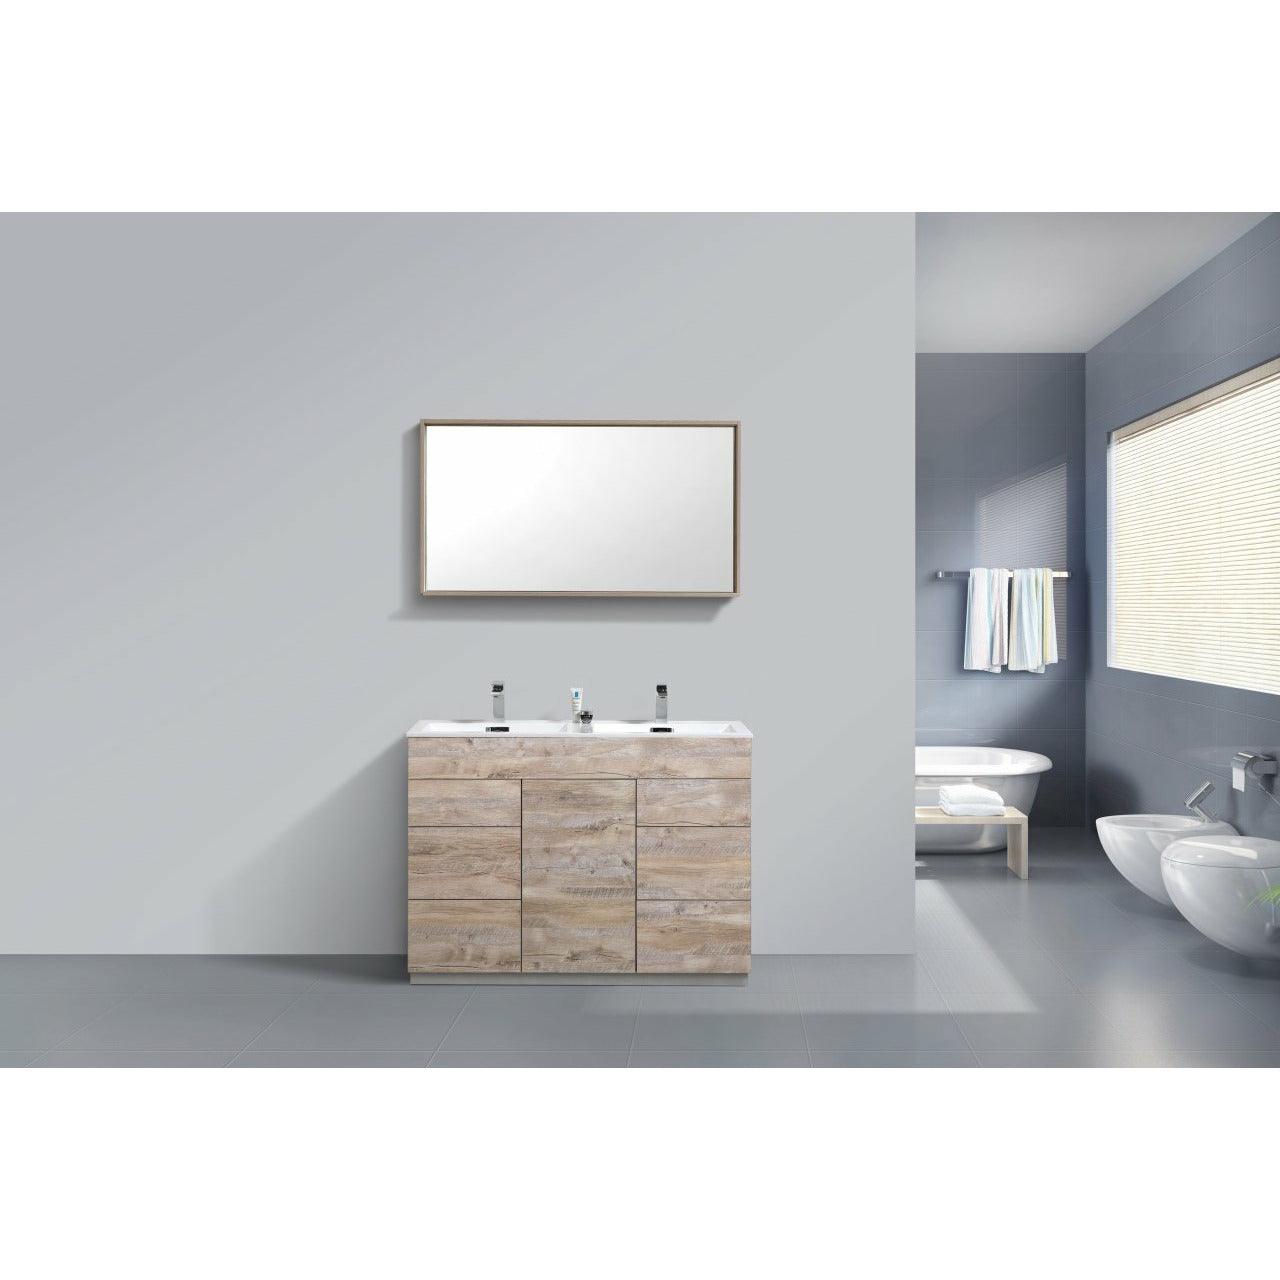 KubeBath Milano Double Sink Modern Bathroom Vanity - Sea & Stone Bath